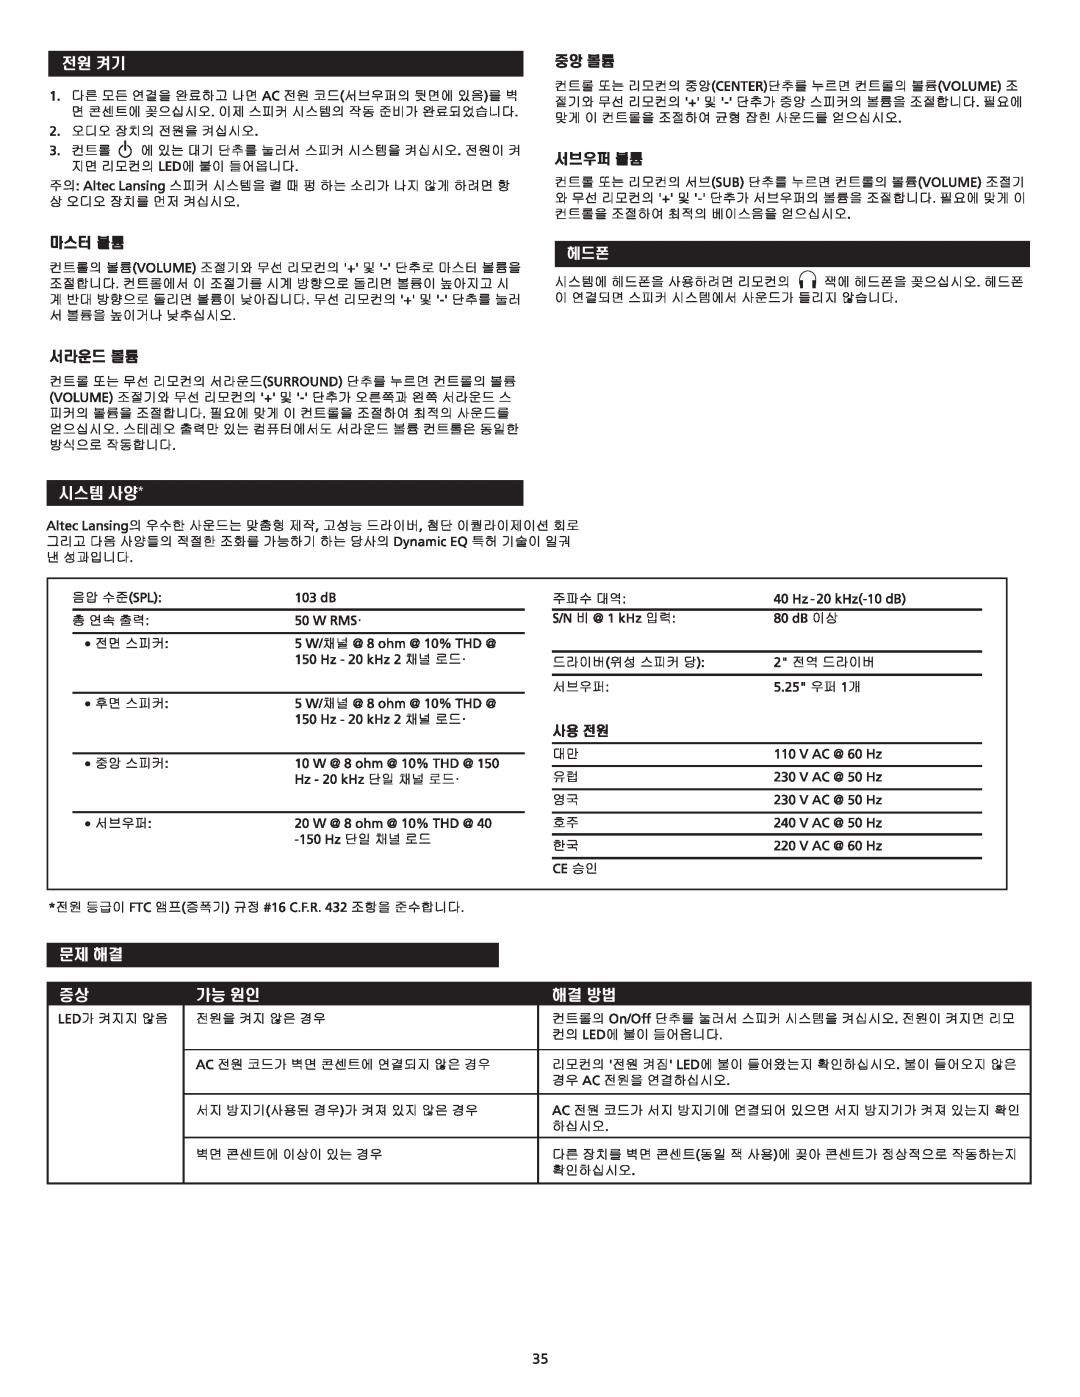 Altec Lansing VS3151R manual 